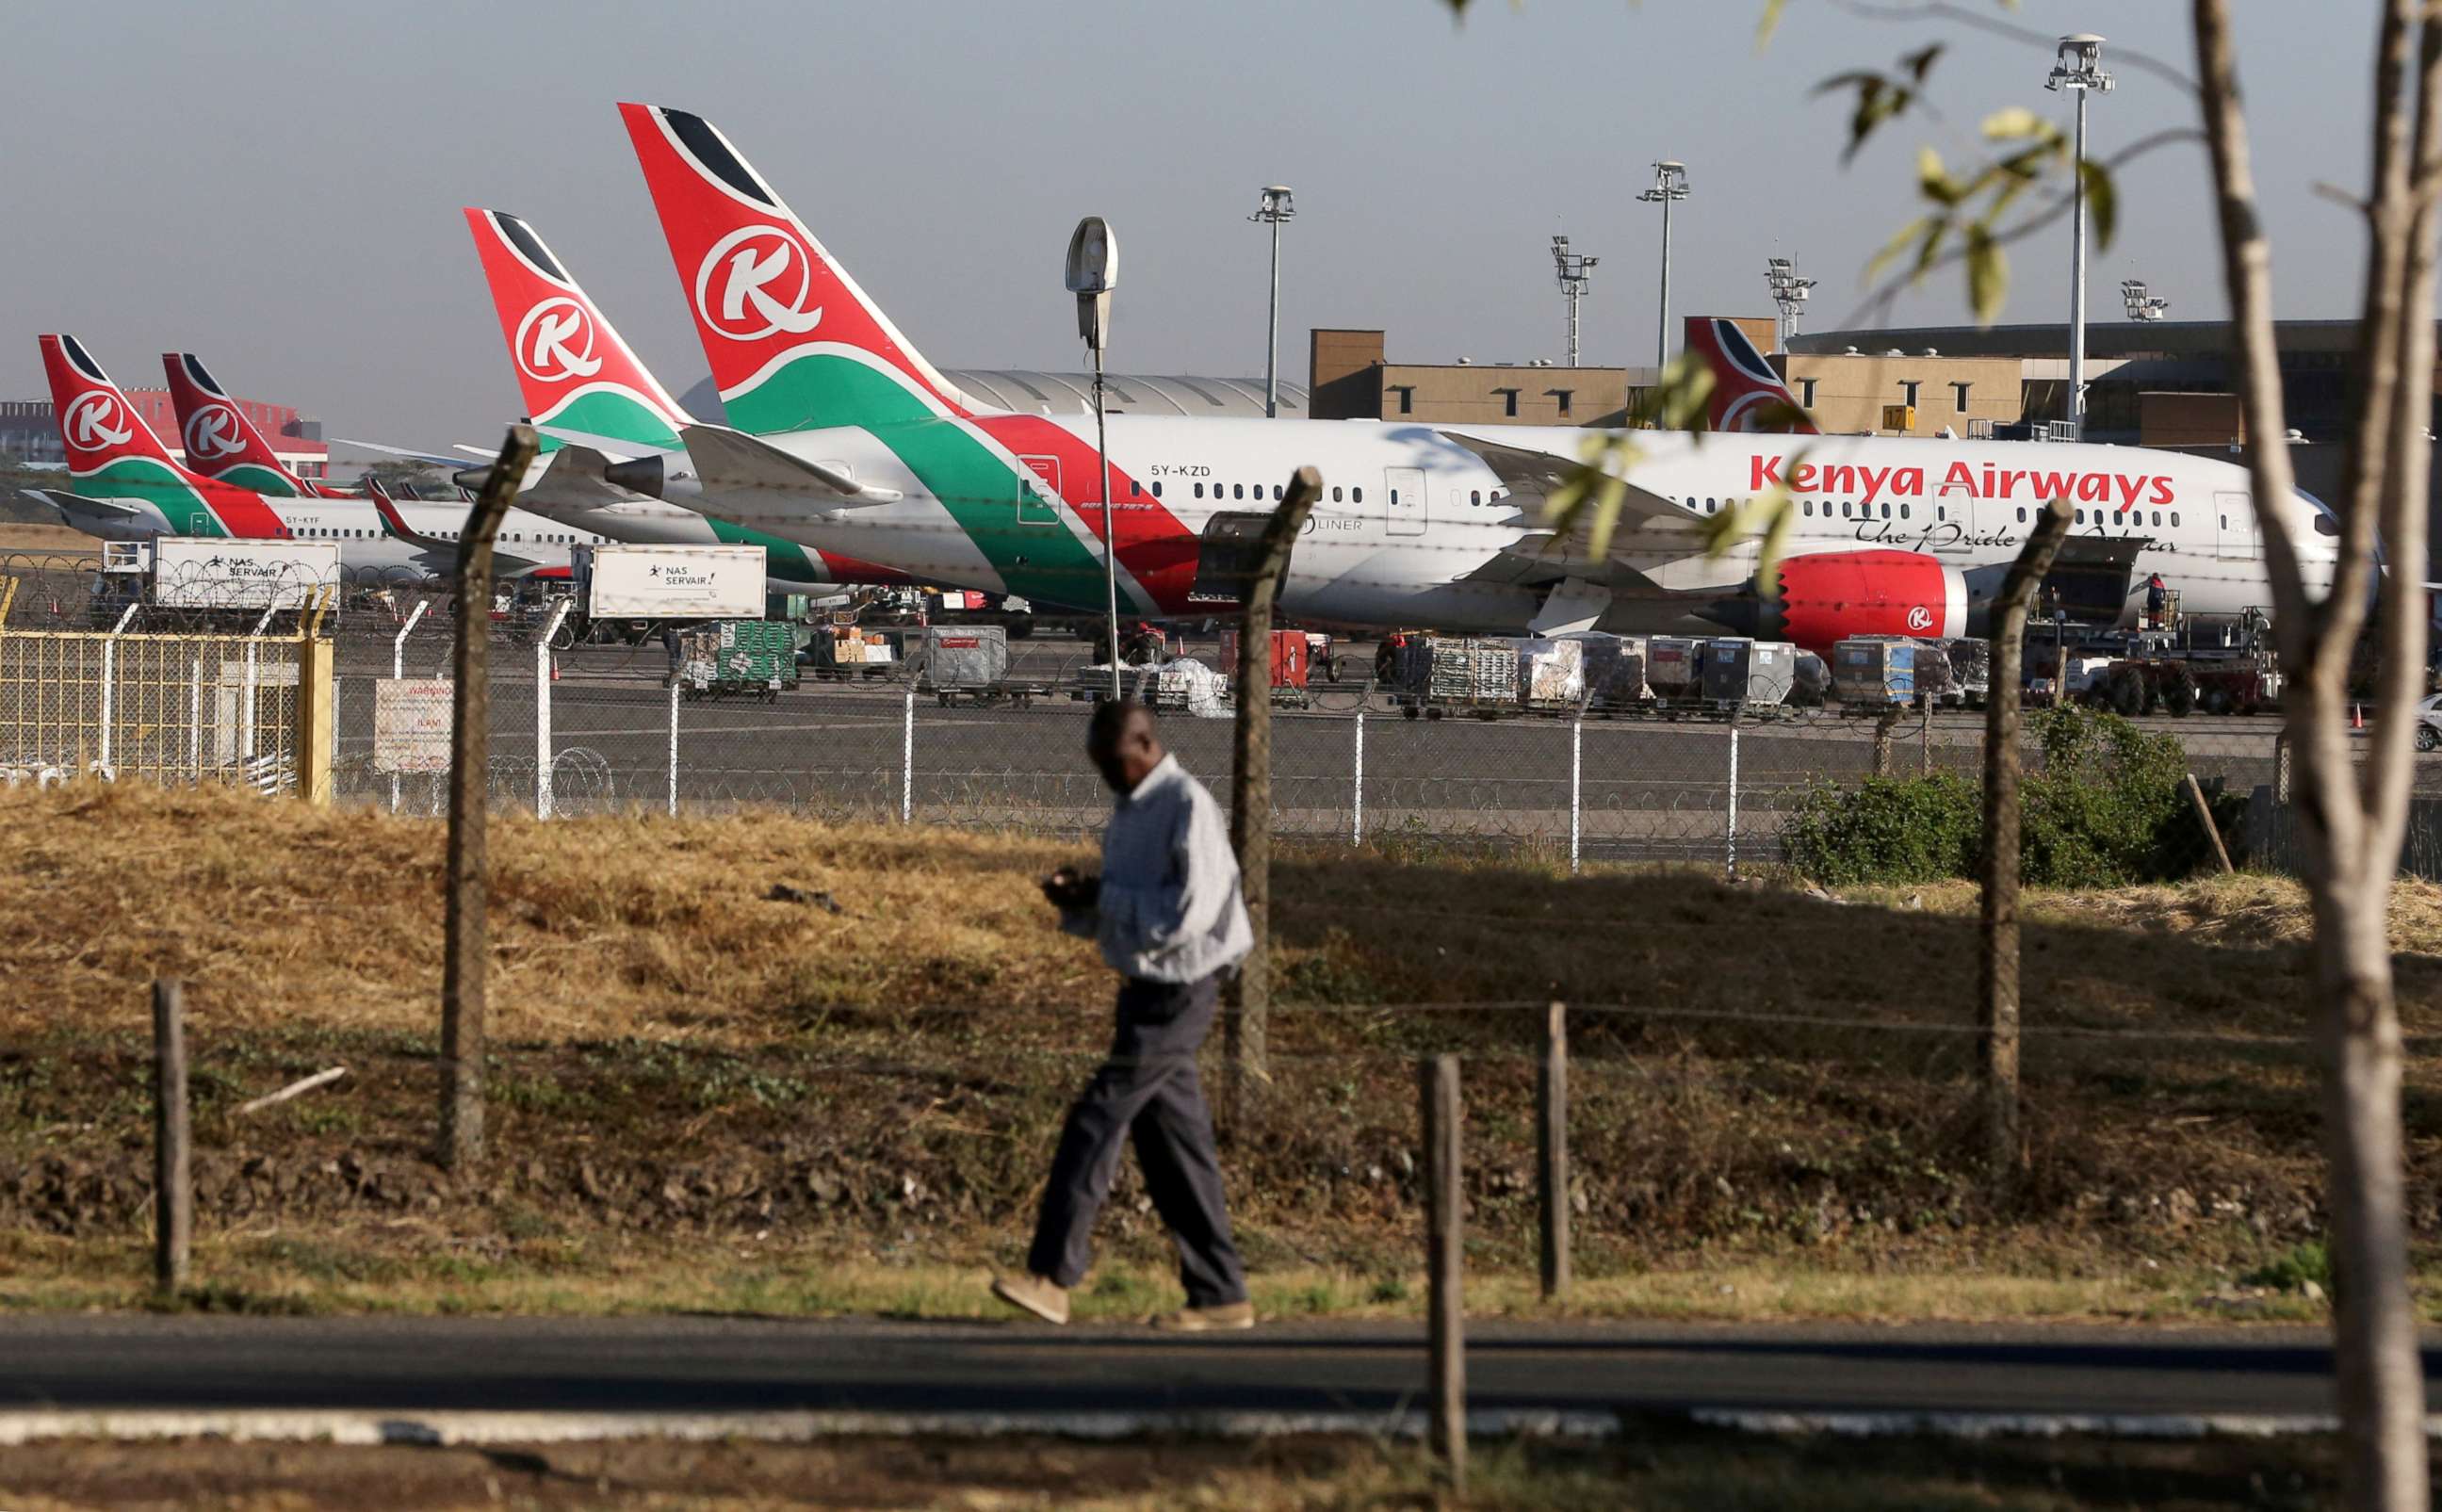 PHOTO: Kenya Airways planes are seen parked at the Jomo Kenyatta International Airport near Nairobi, Kenya, March 6, 2019.